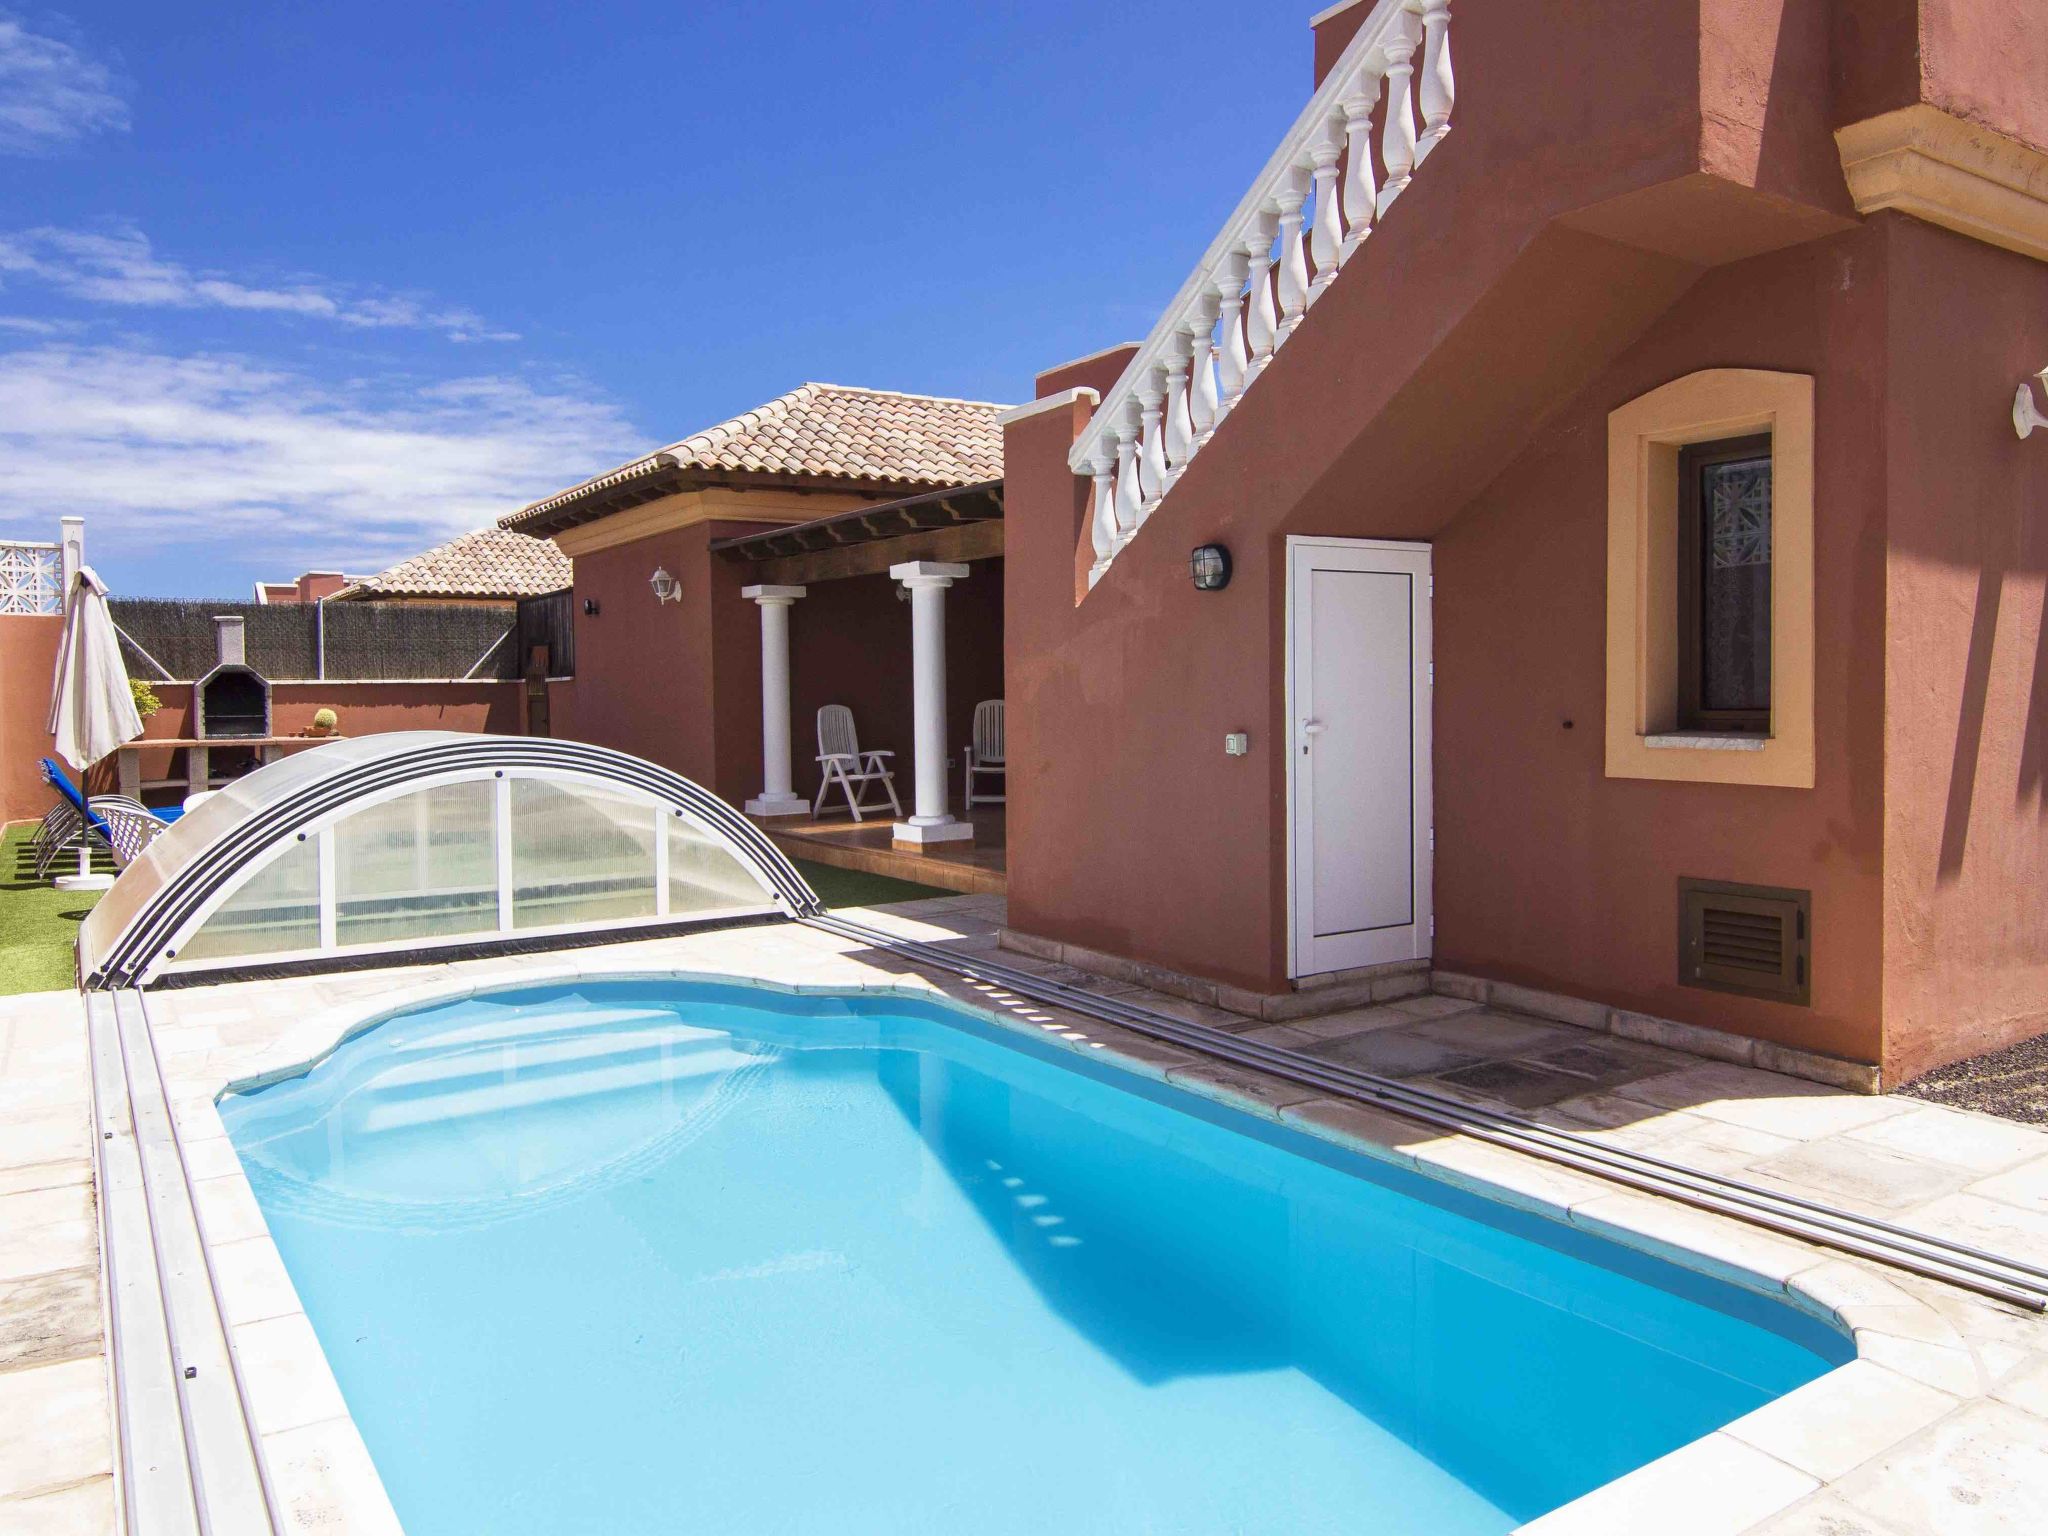 Villa Olvera,Corralejo,Fuerteventura #1